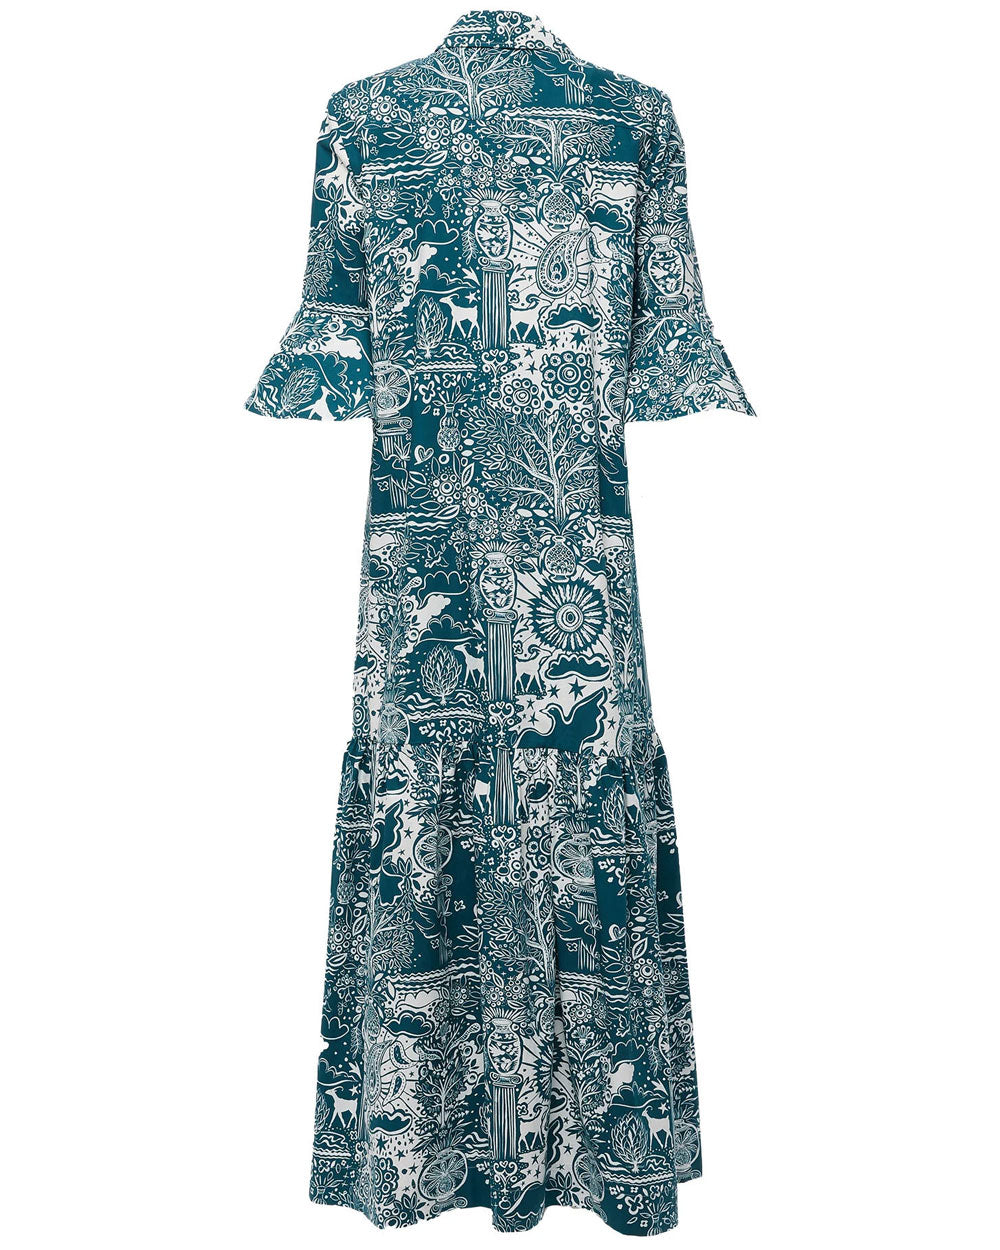 Ionic Artemis Dress in Cotton Poplin